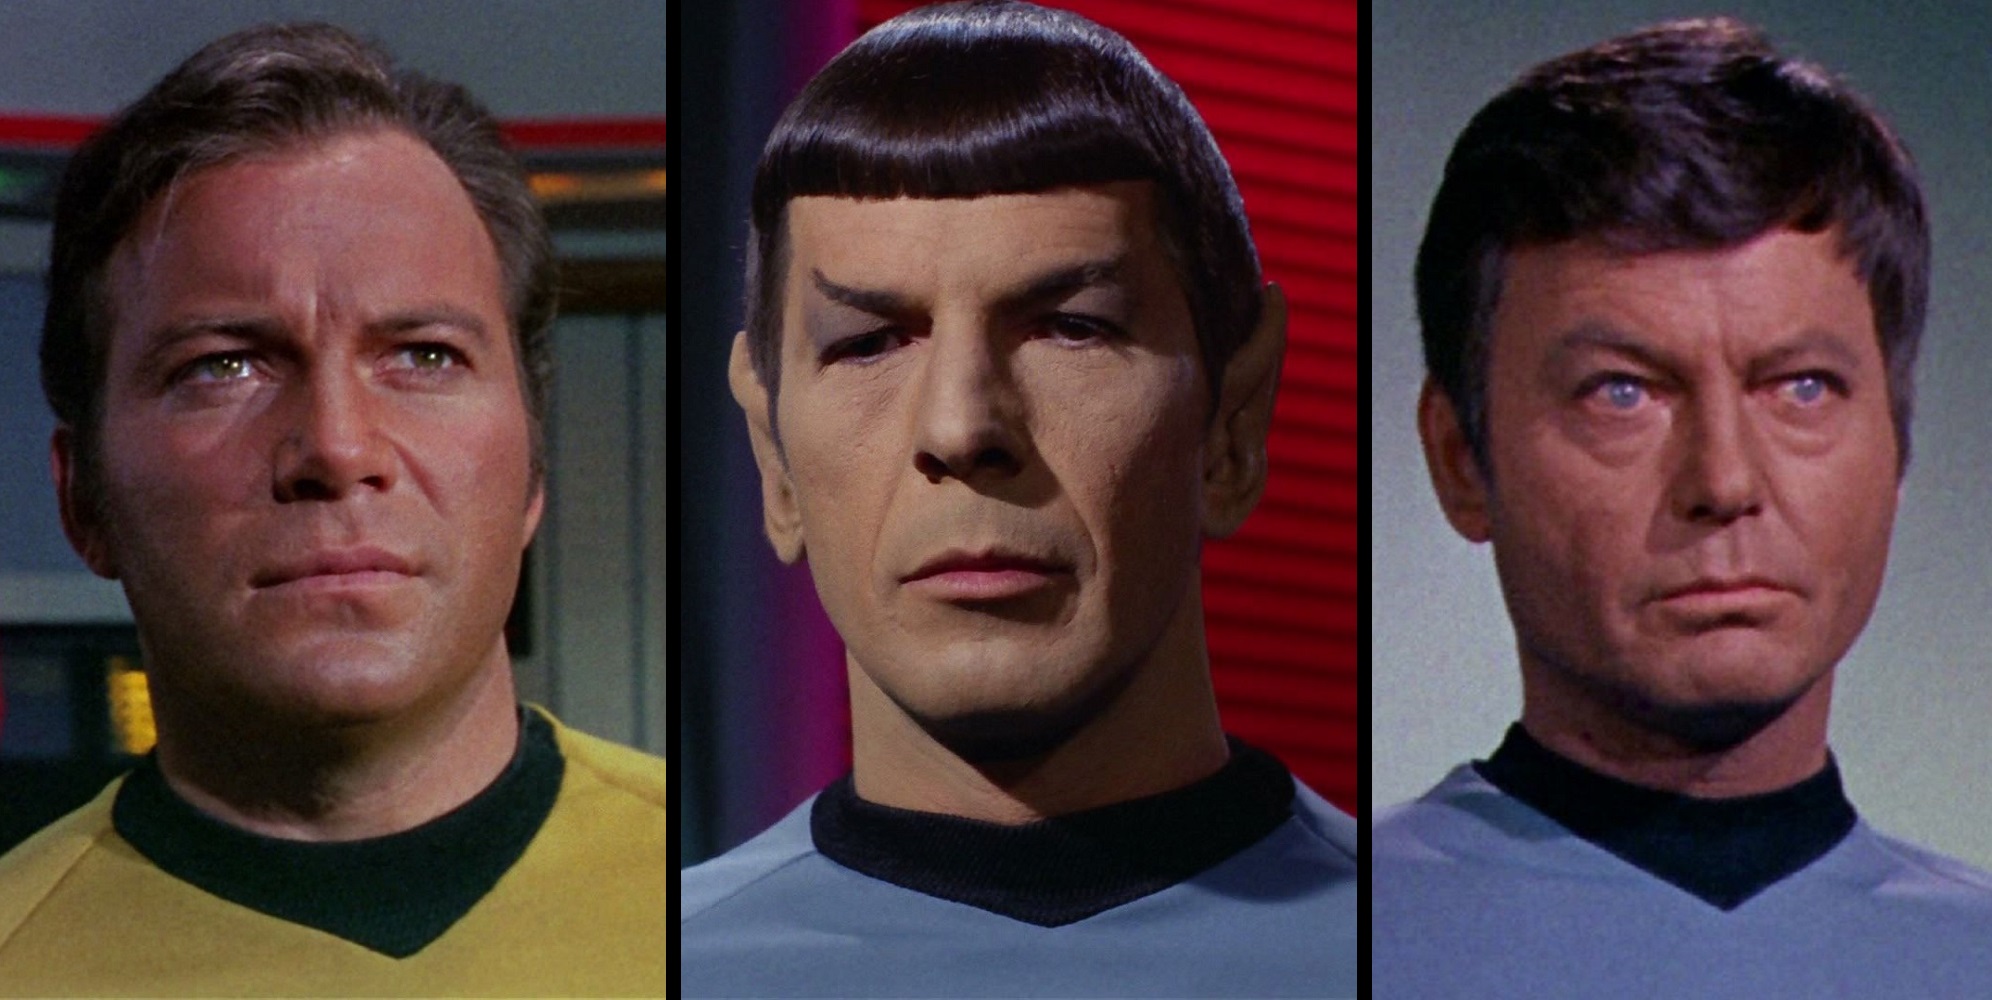 Star Trek TOS uniforms